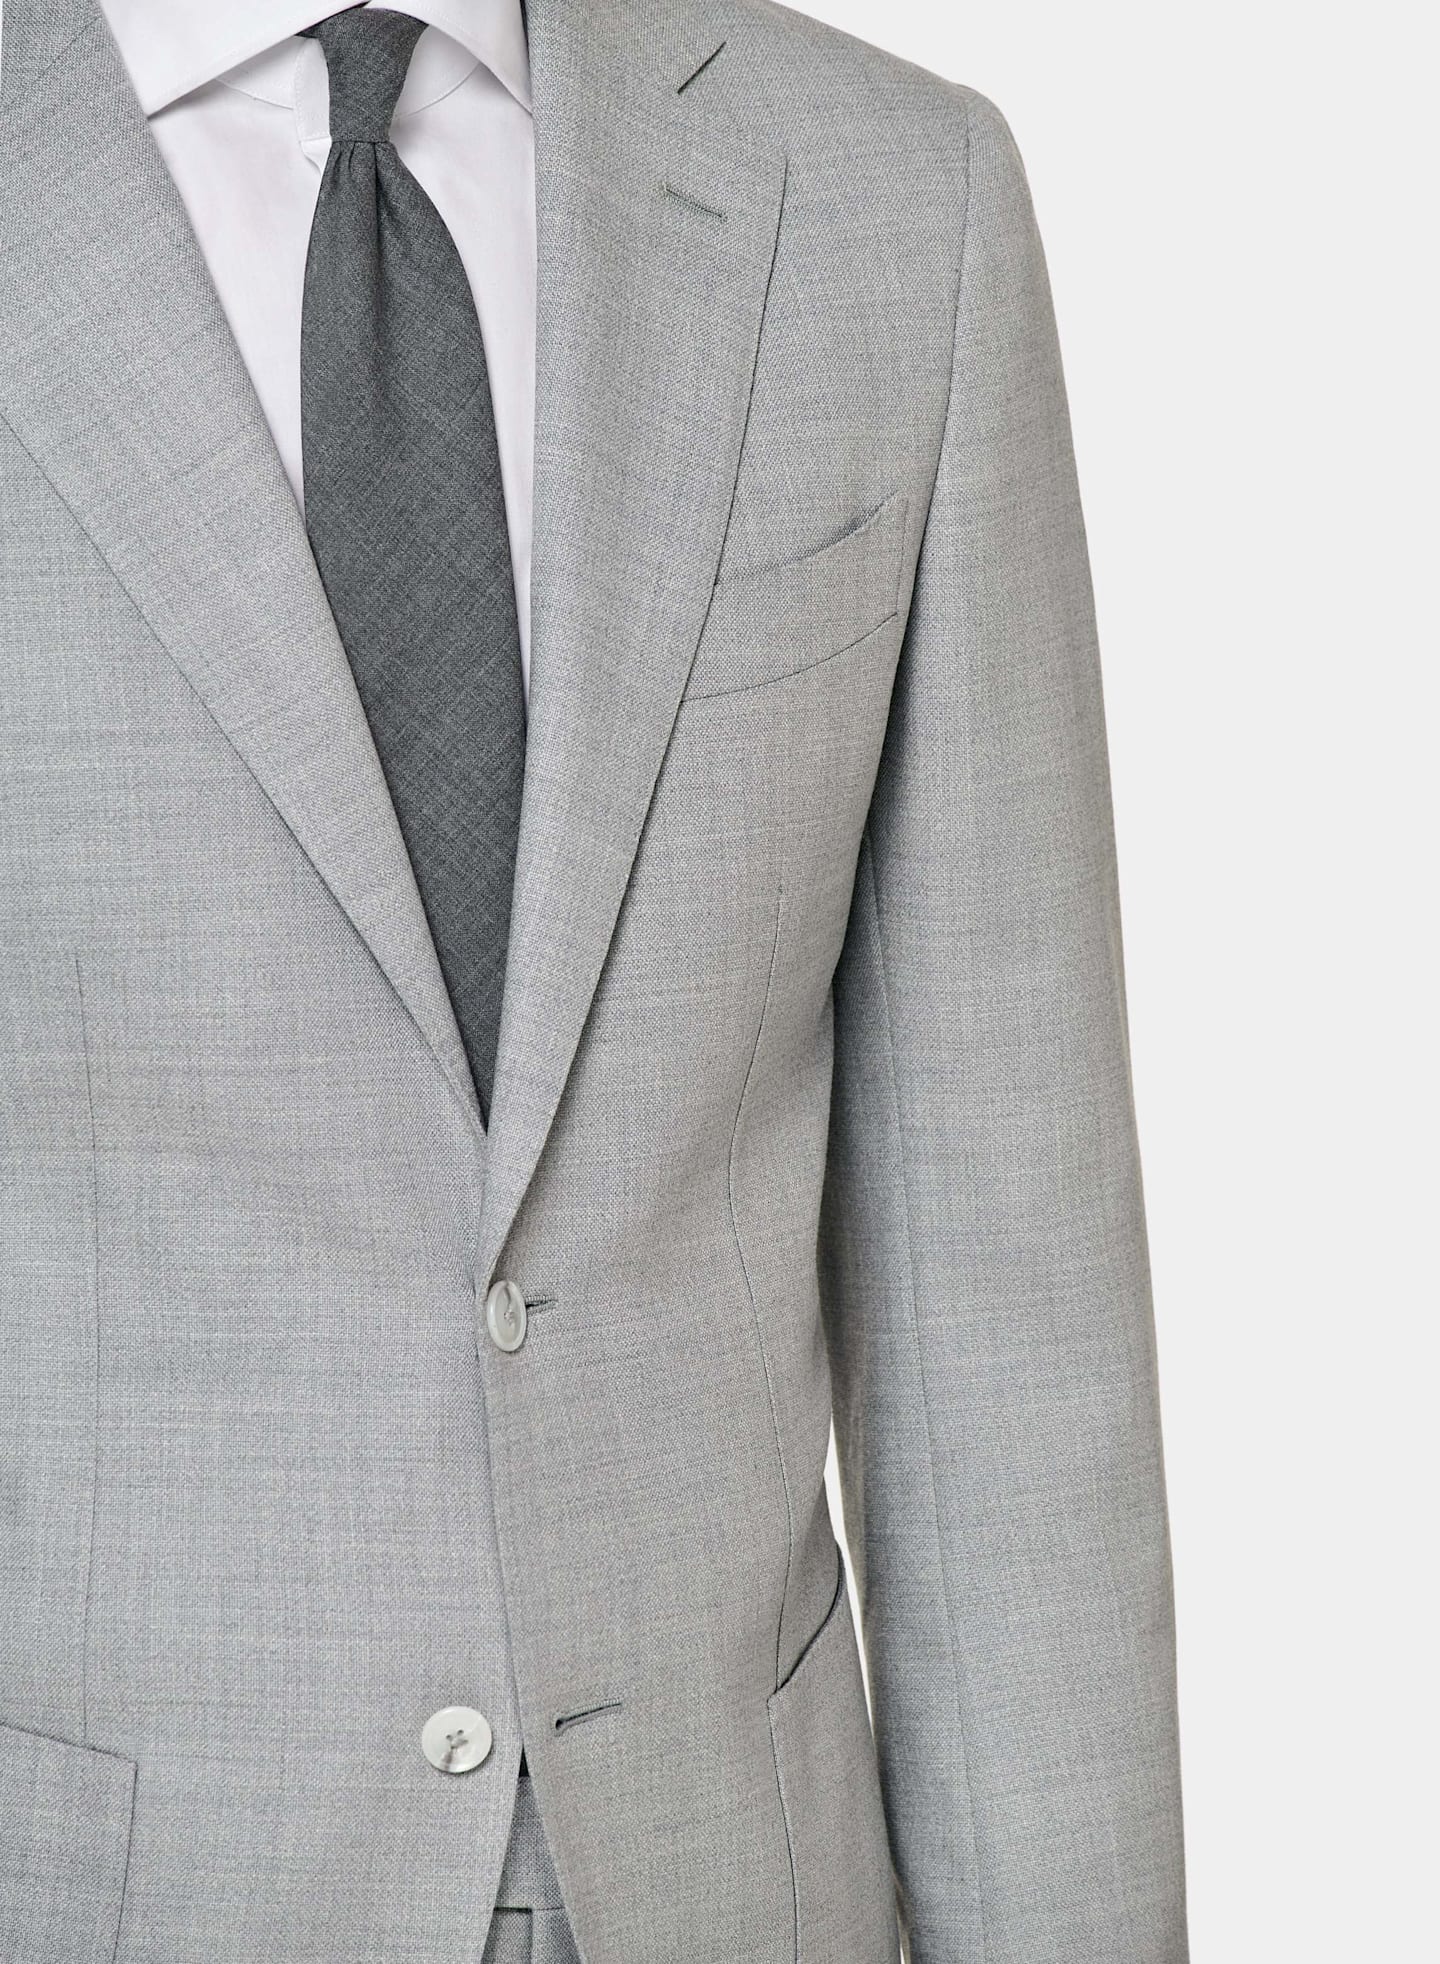 Grey suit jacket worn with white shirt & grey tie